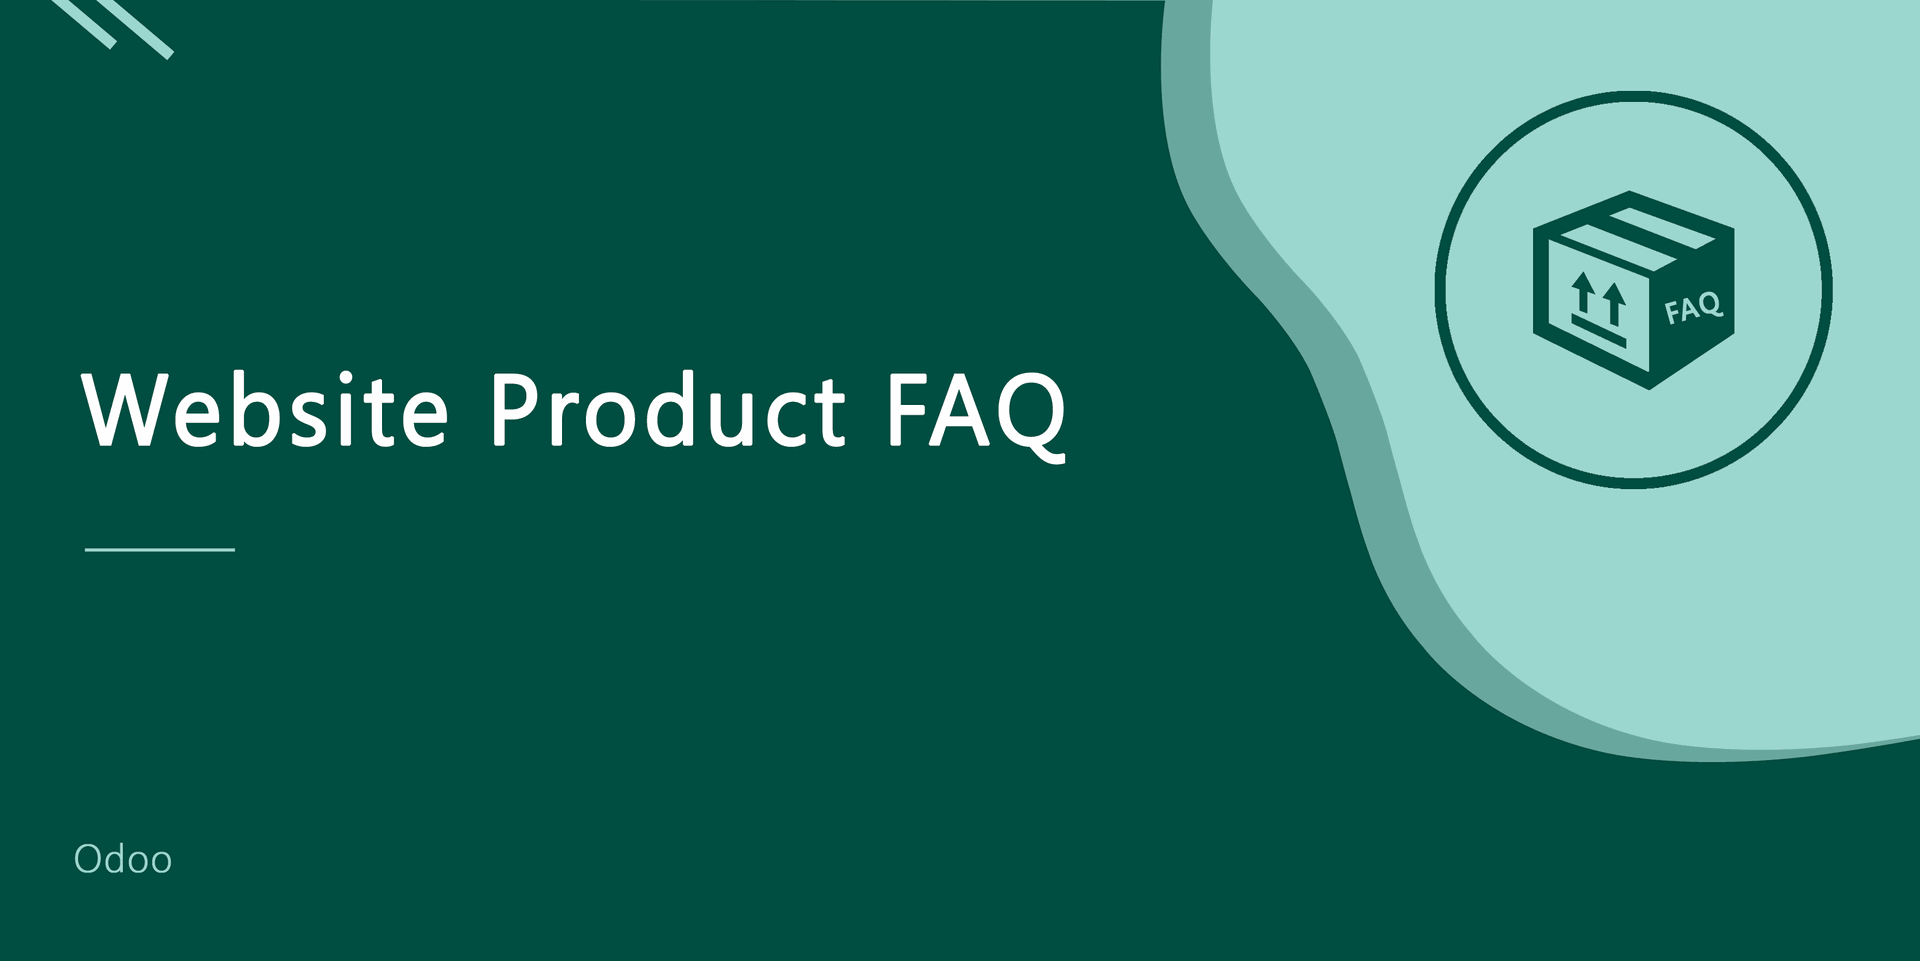 Website Product FAQ
